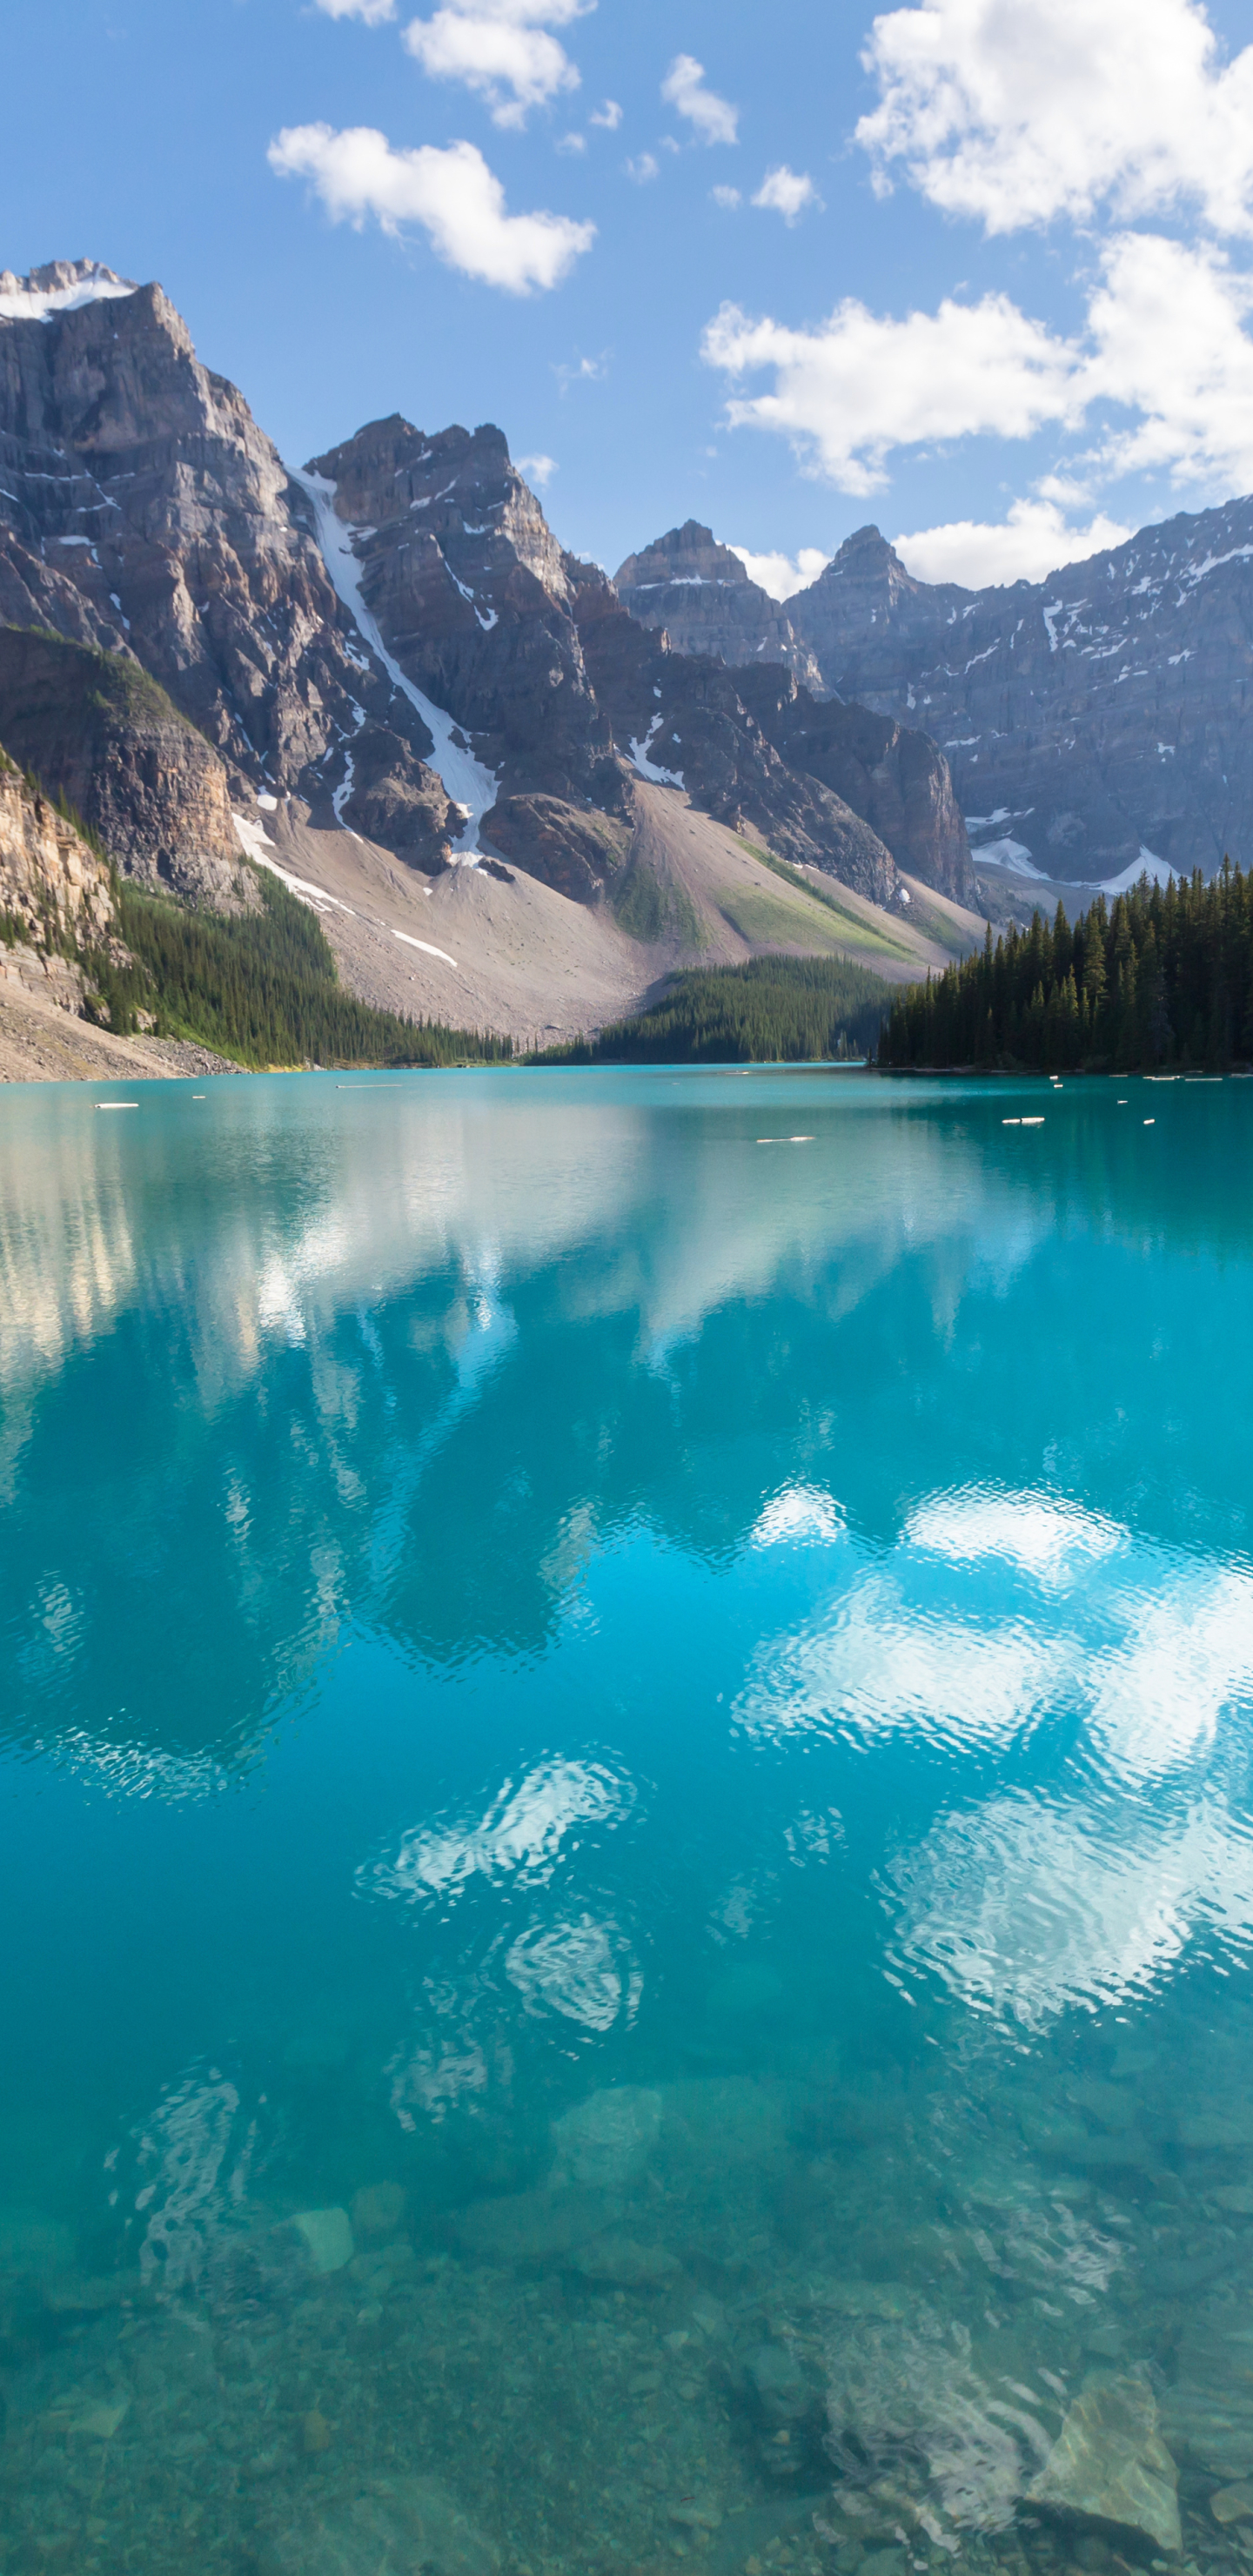 Handy-Wallpaper Natur, Seen, Berg, See, Kanada, Gebirge, Moränensee, Erde/natur, Spiegelung, Betrachtung kostenlos herunterladen.